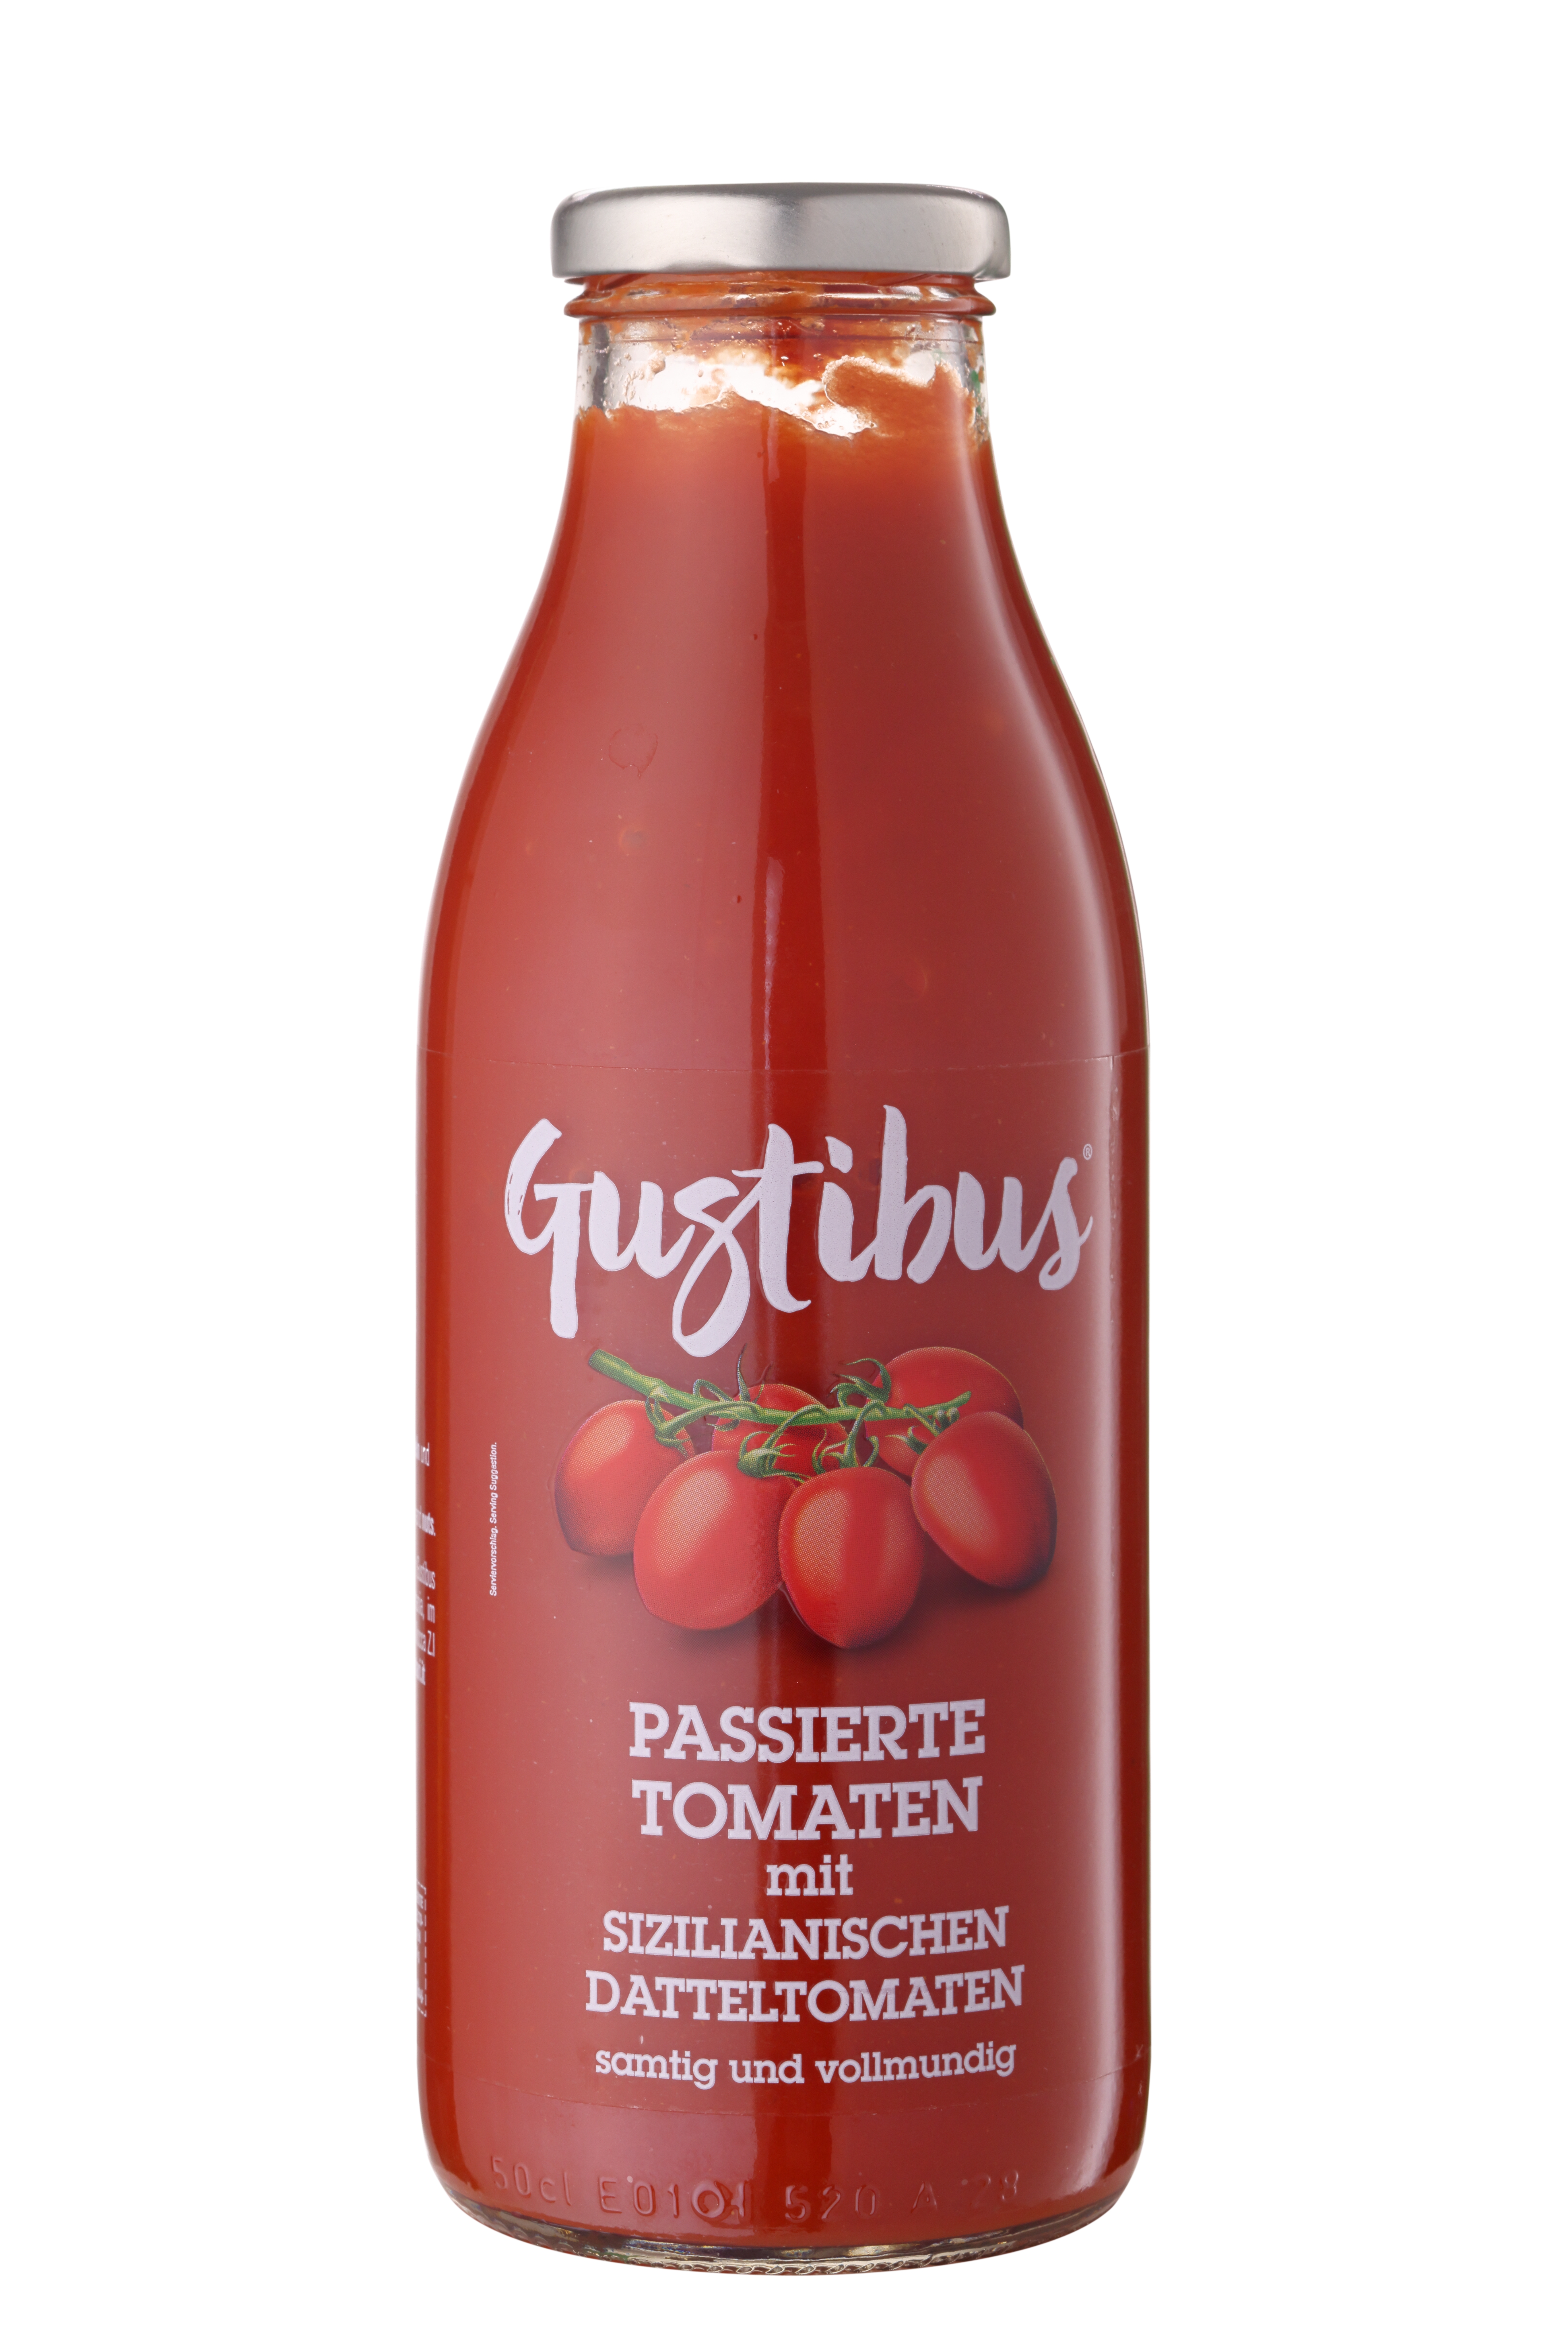 Gustibus, Passierte Tomaten mit Datteltomaten, 520g